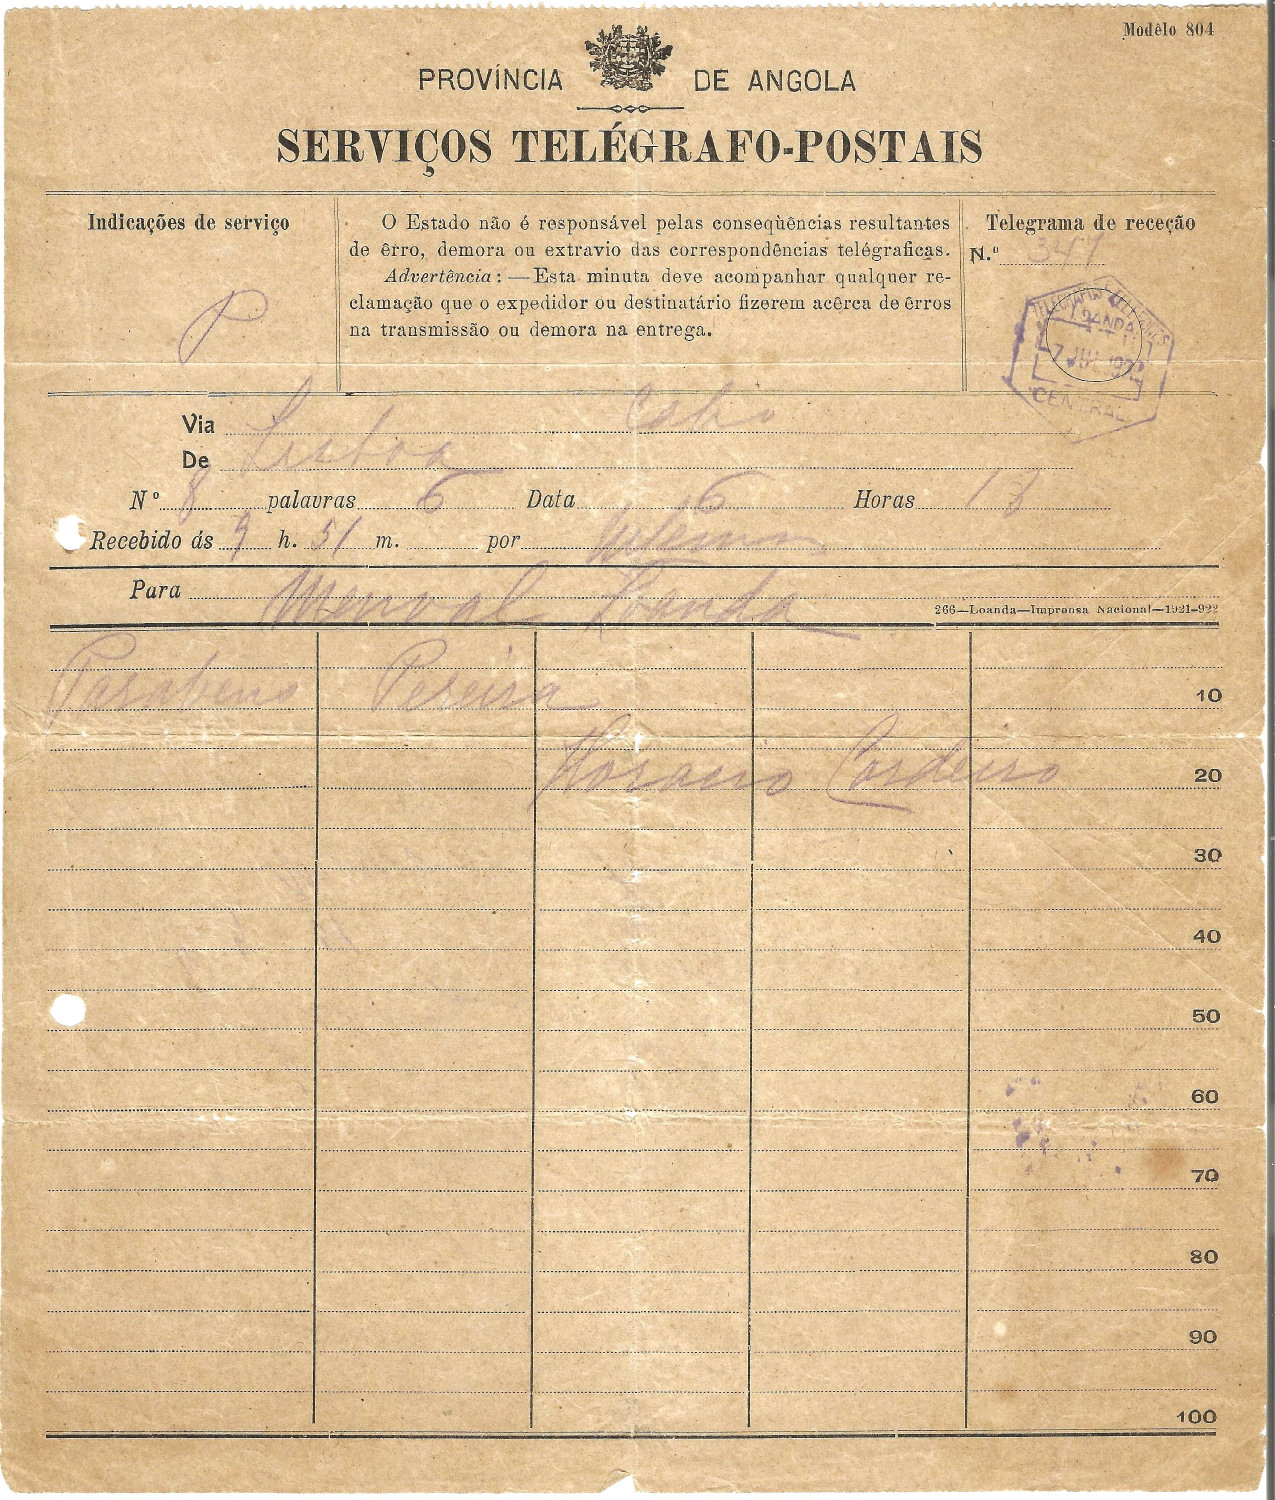 Telegram 804 of 1922